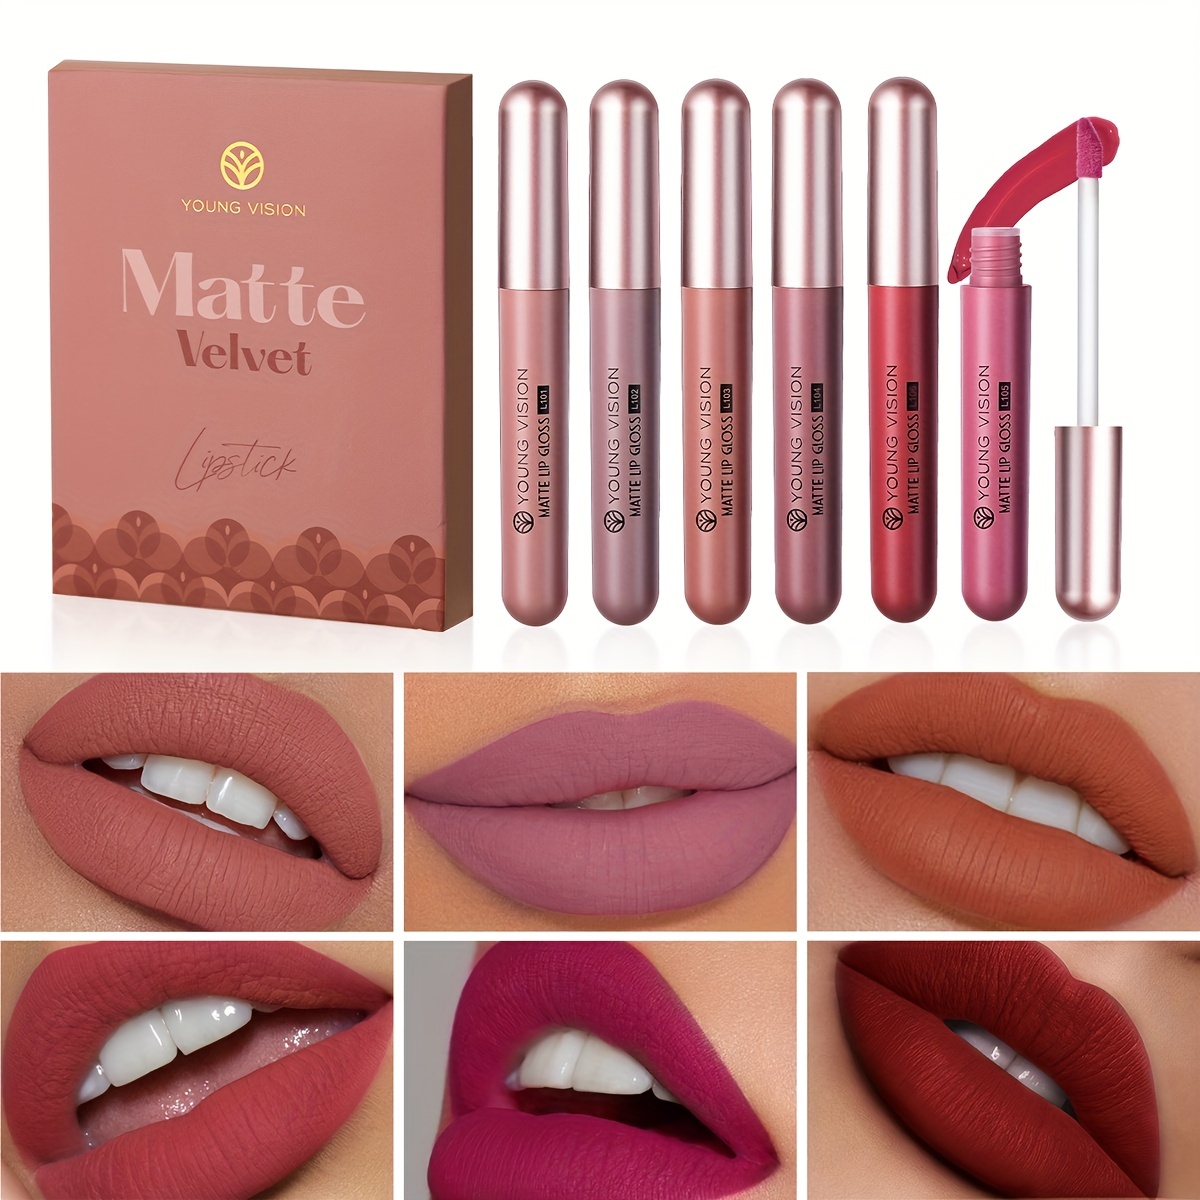 

6 Pcs/set Waterproof Matte Velvet Lipgloss - Long-lasting Liquid Lipstick Lip Gloss Set For Flawless Makeup